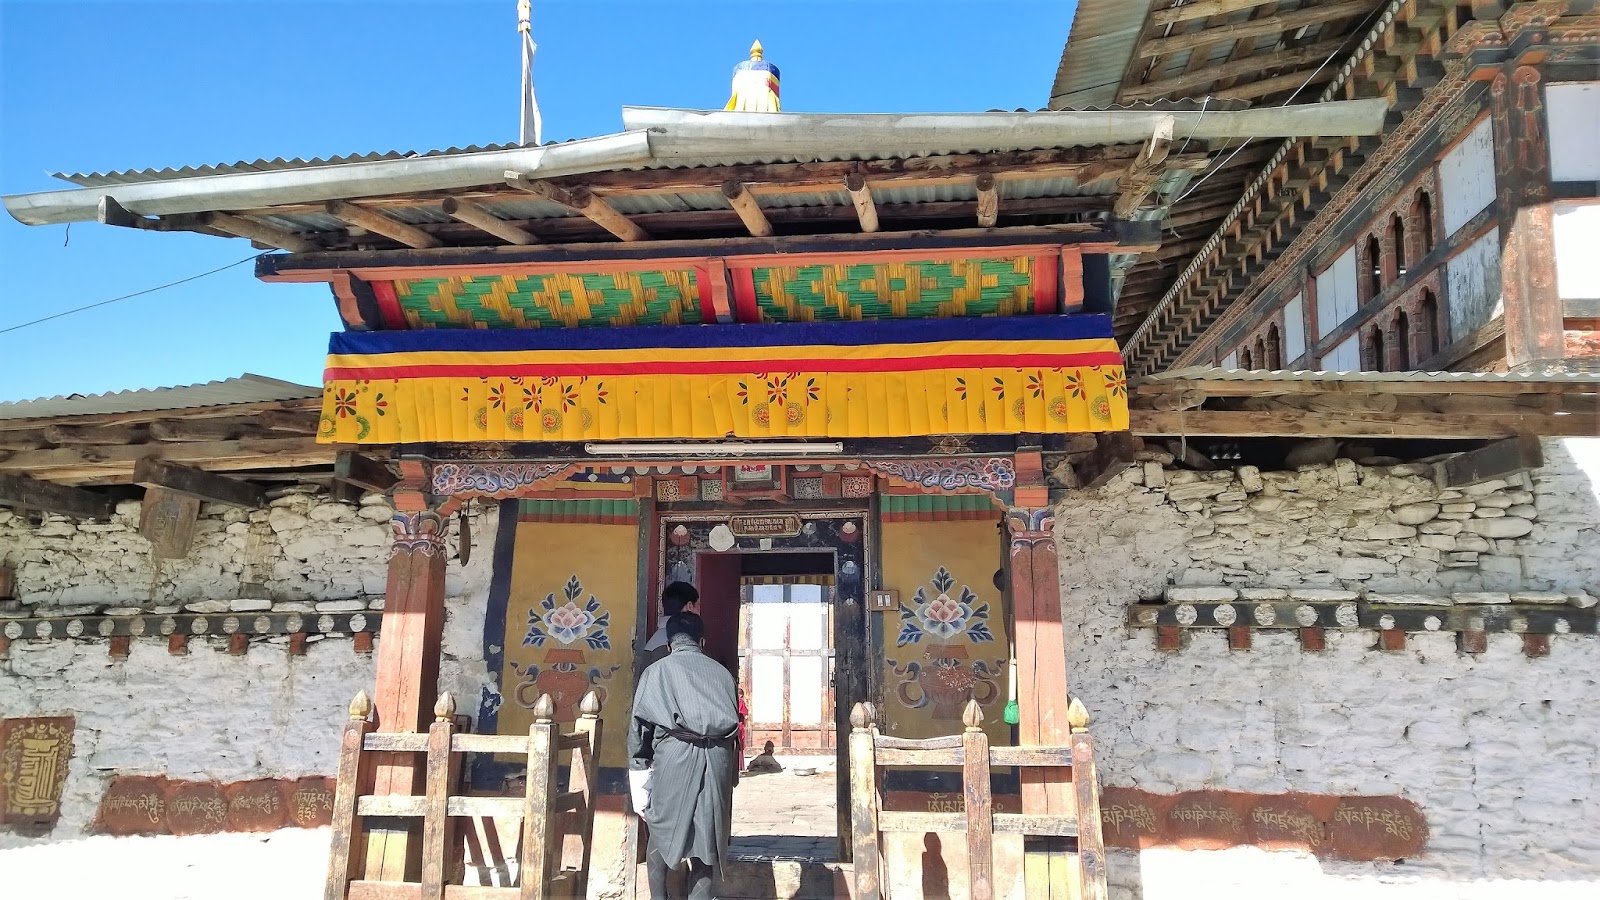 Tamshing Lhakhang Temple